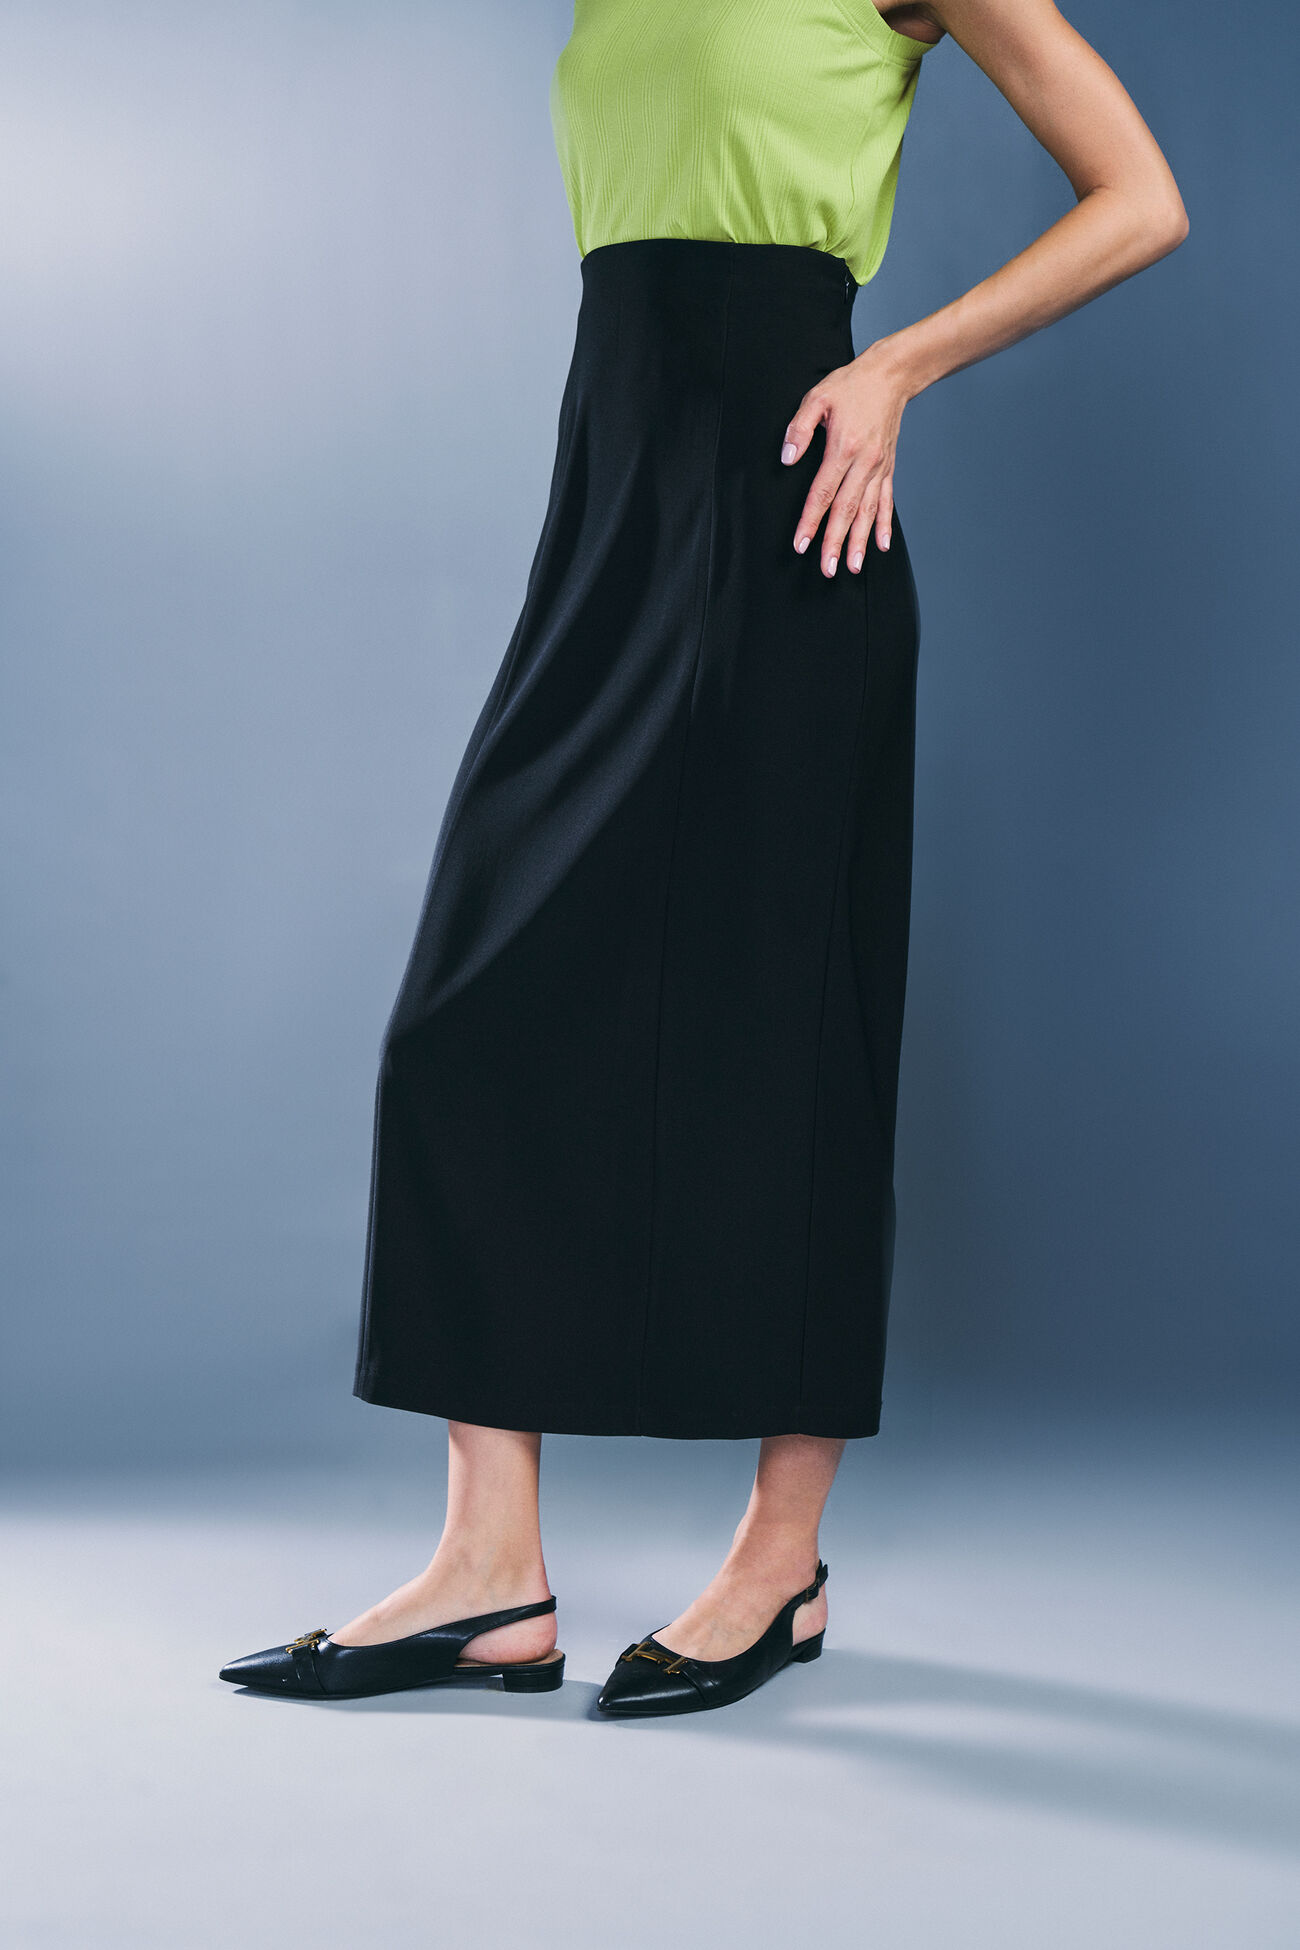 Double Duty Skirt, Black, image 3